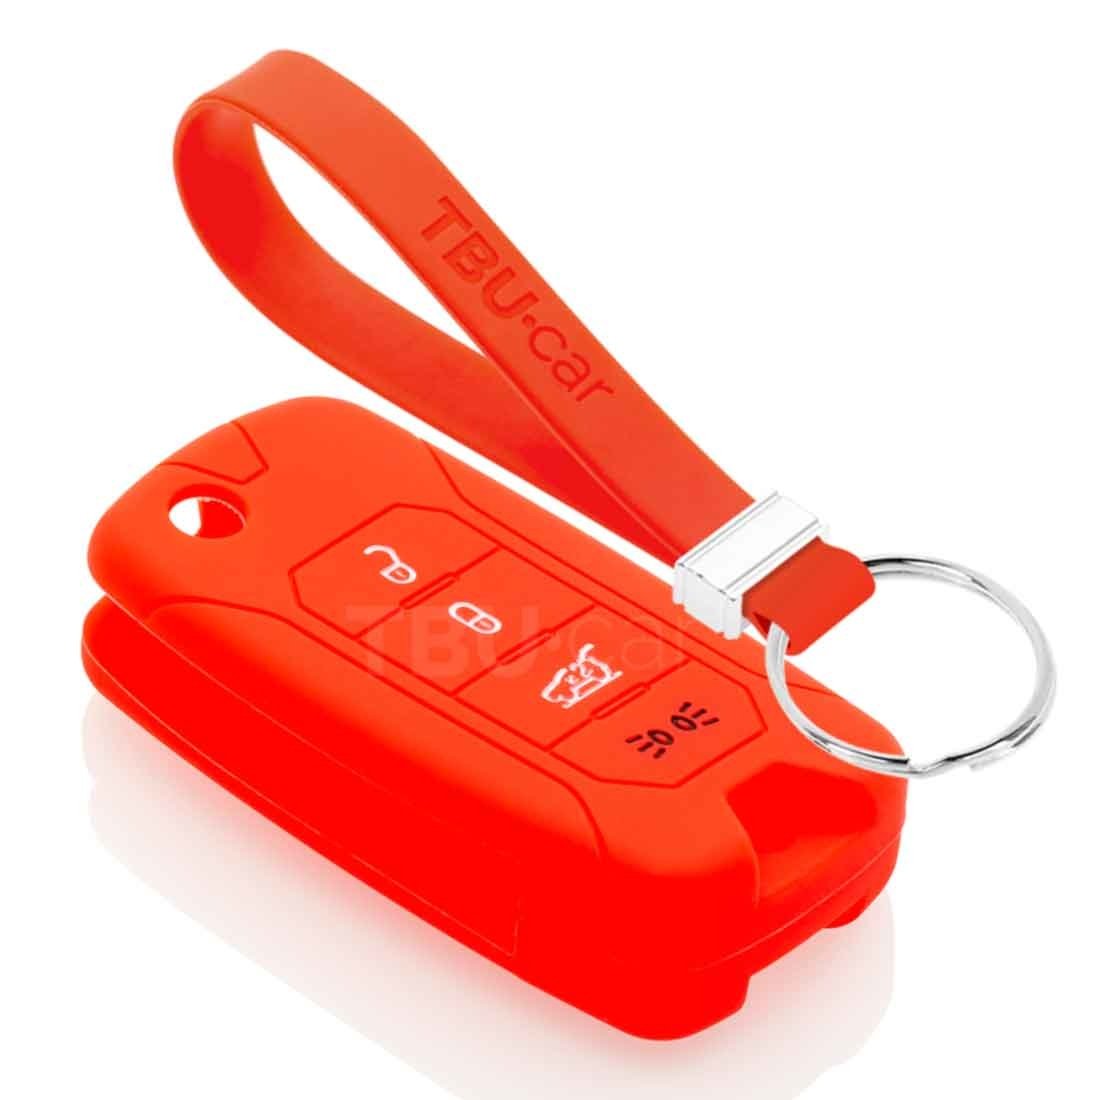 TBU car TBU car Autoschlüssel Hülle kompatibel mit Jeep 4 Tasten - Schutzhülle aus Silikon - Auto Schlüsselhülle Cover in Rot